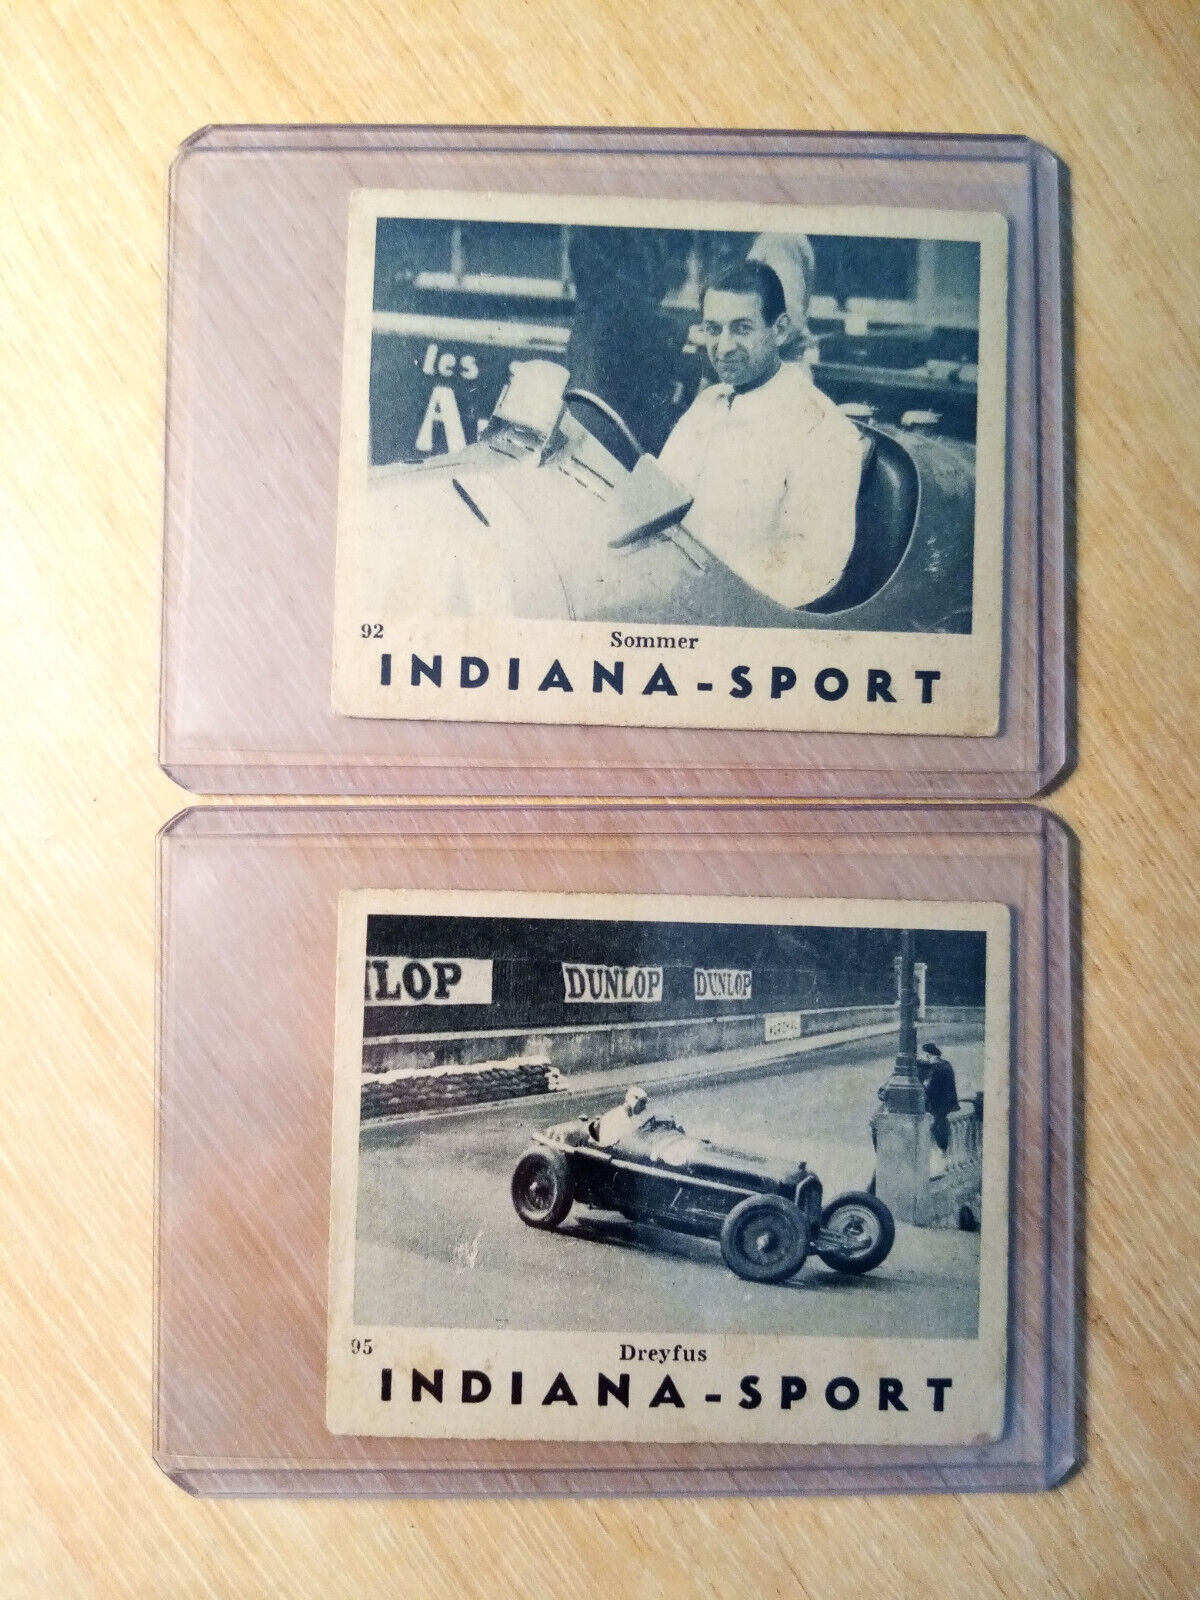 1930 SUMMER DREYFUS Card Indiana Sport Jean Donat Dupont Auto Racing no Fangio